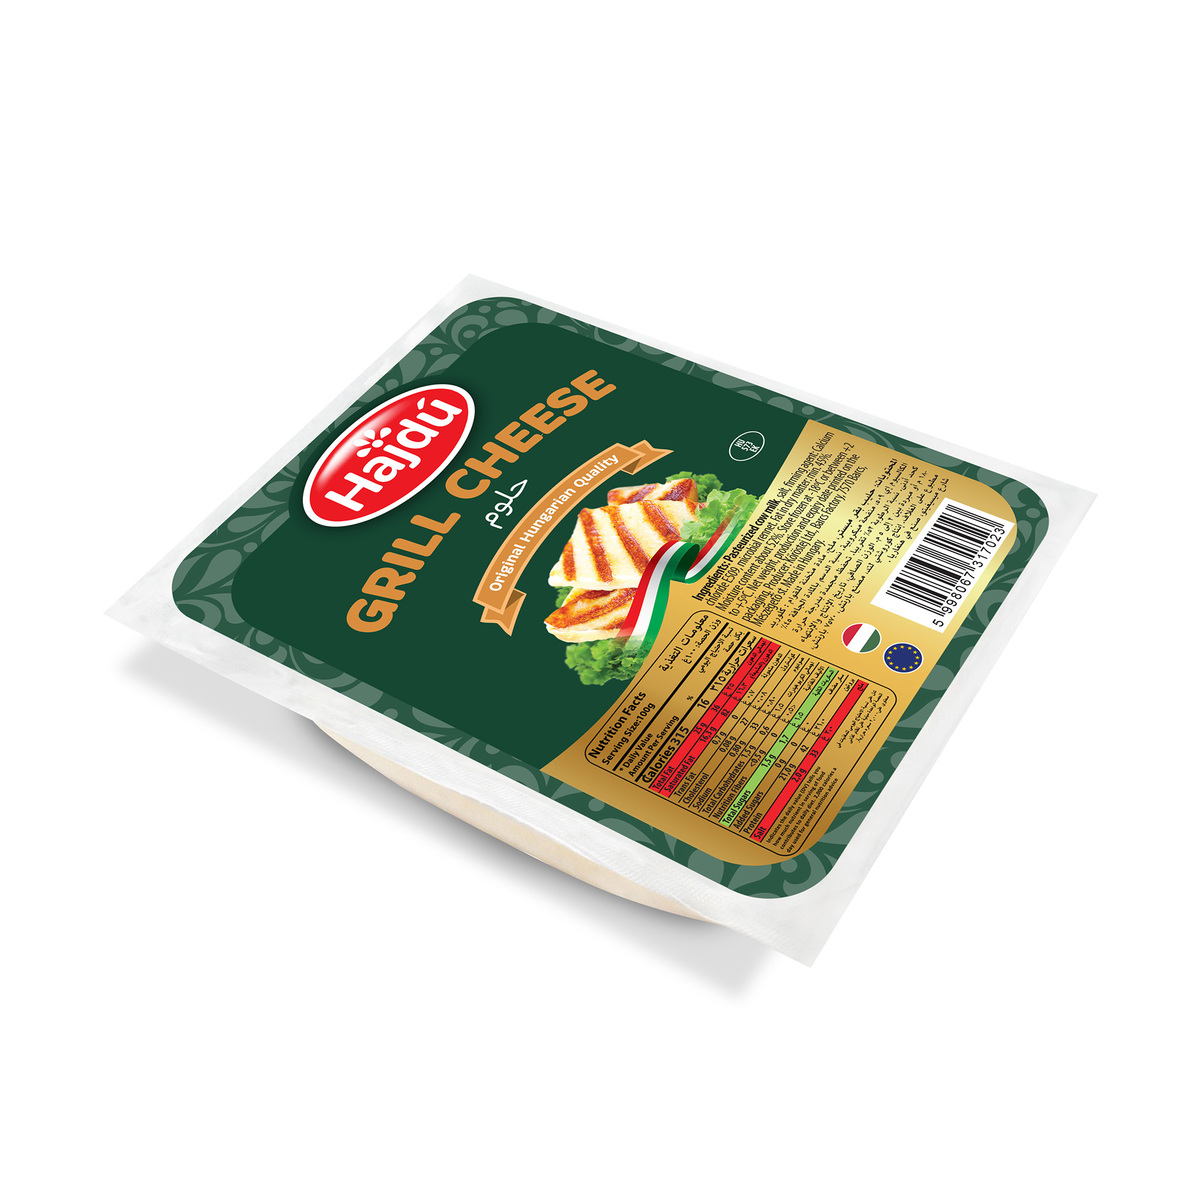 Hajdu Grill Cheese Value Pack 2 x 200 g